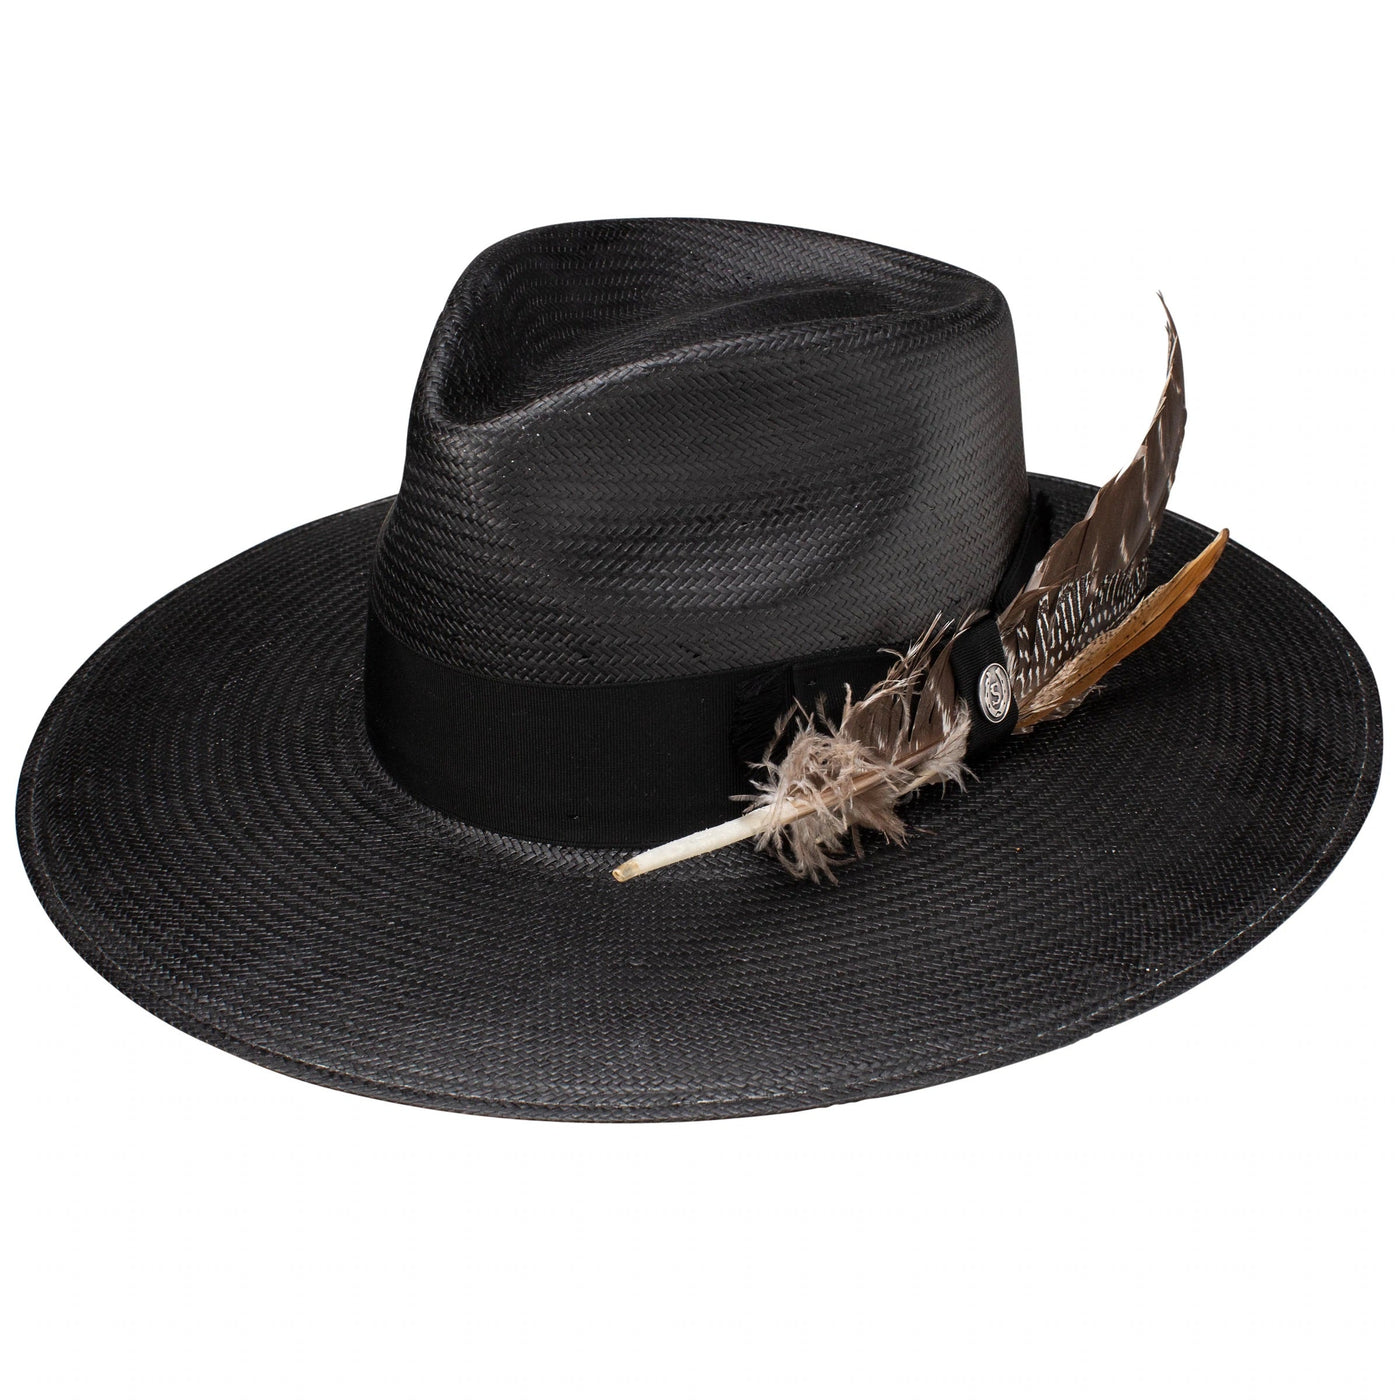 The Atacama Straw Hat by Stetson - Black